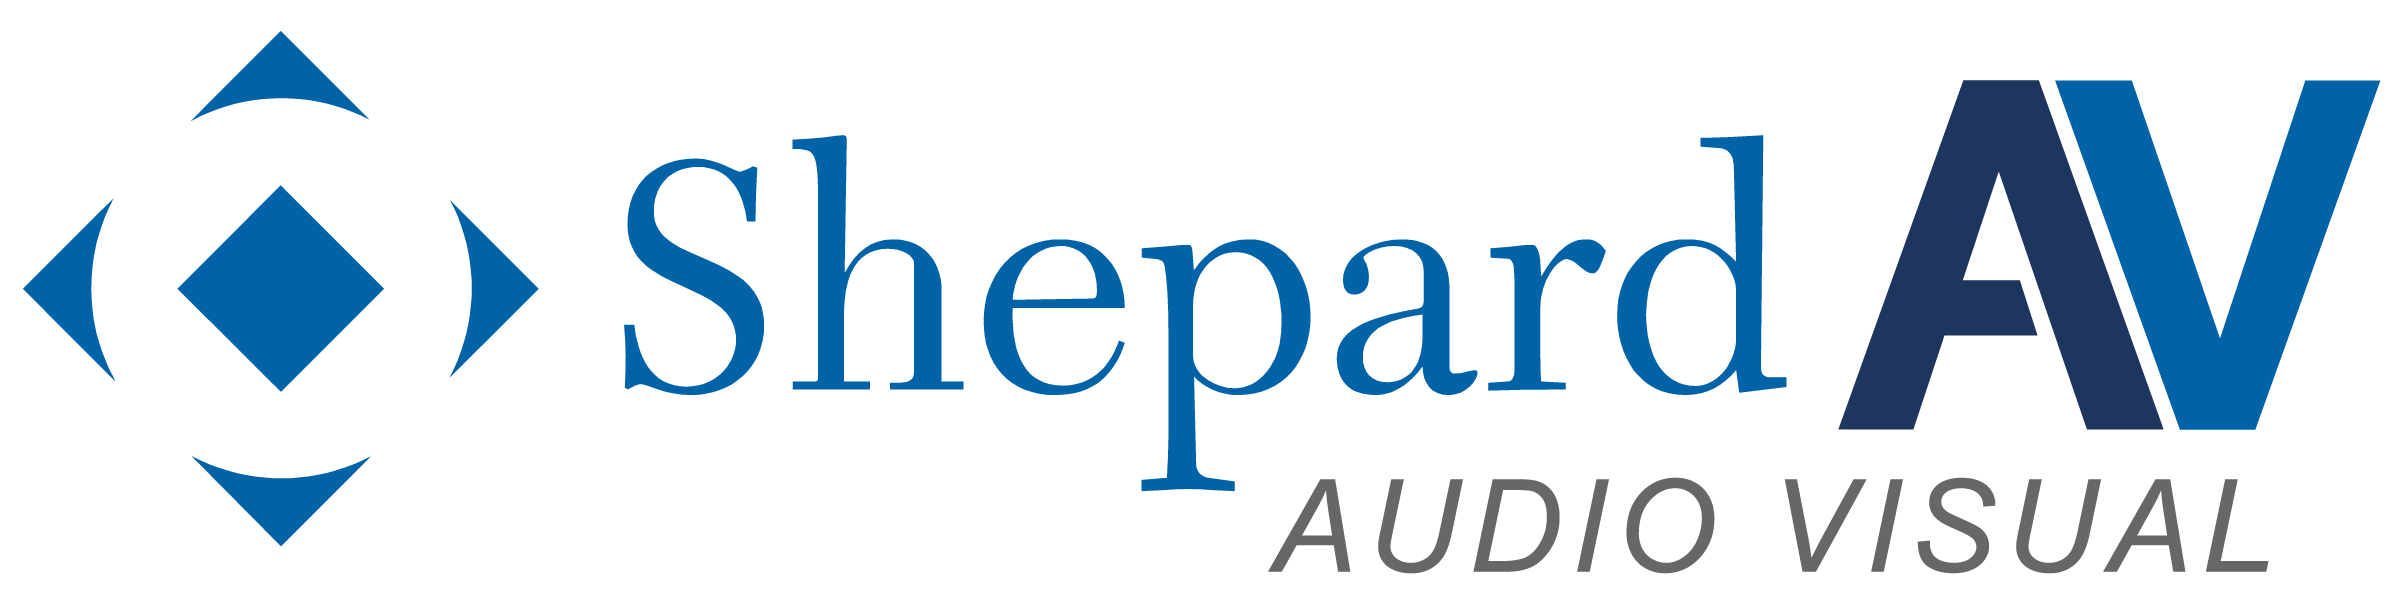 Shepard Audio Visual logo